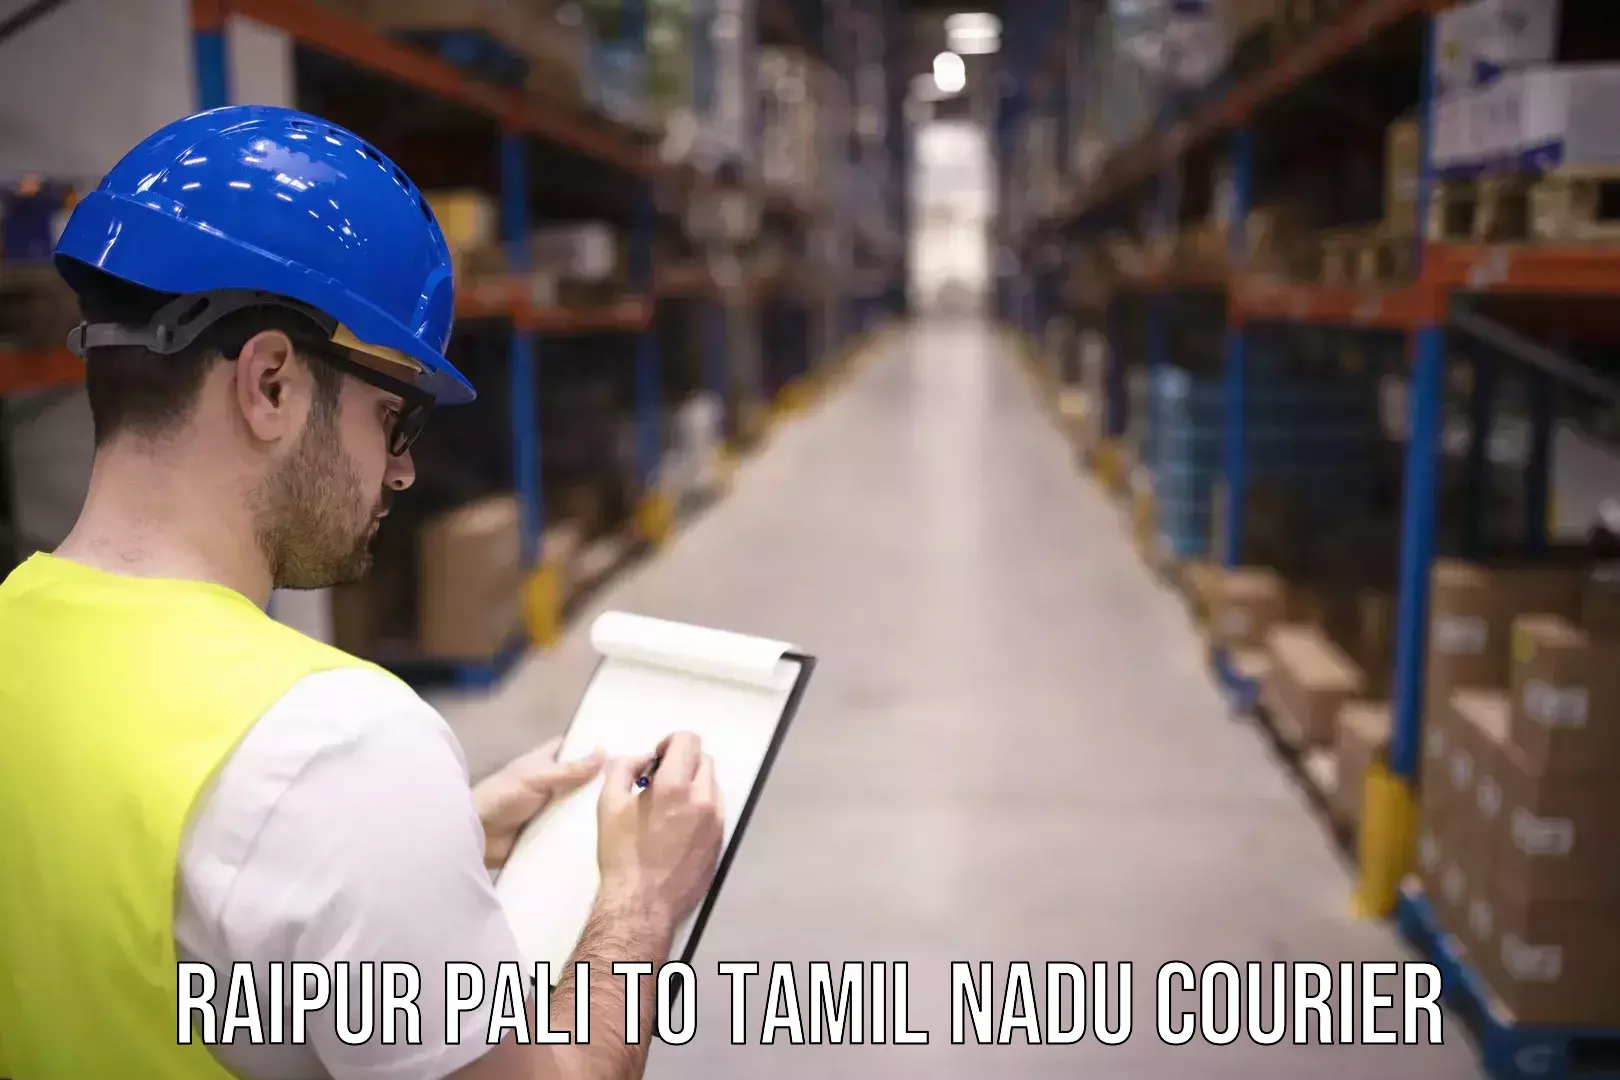 International courier networks Raipur Pali to Chennai Port